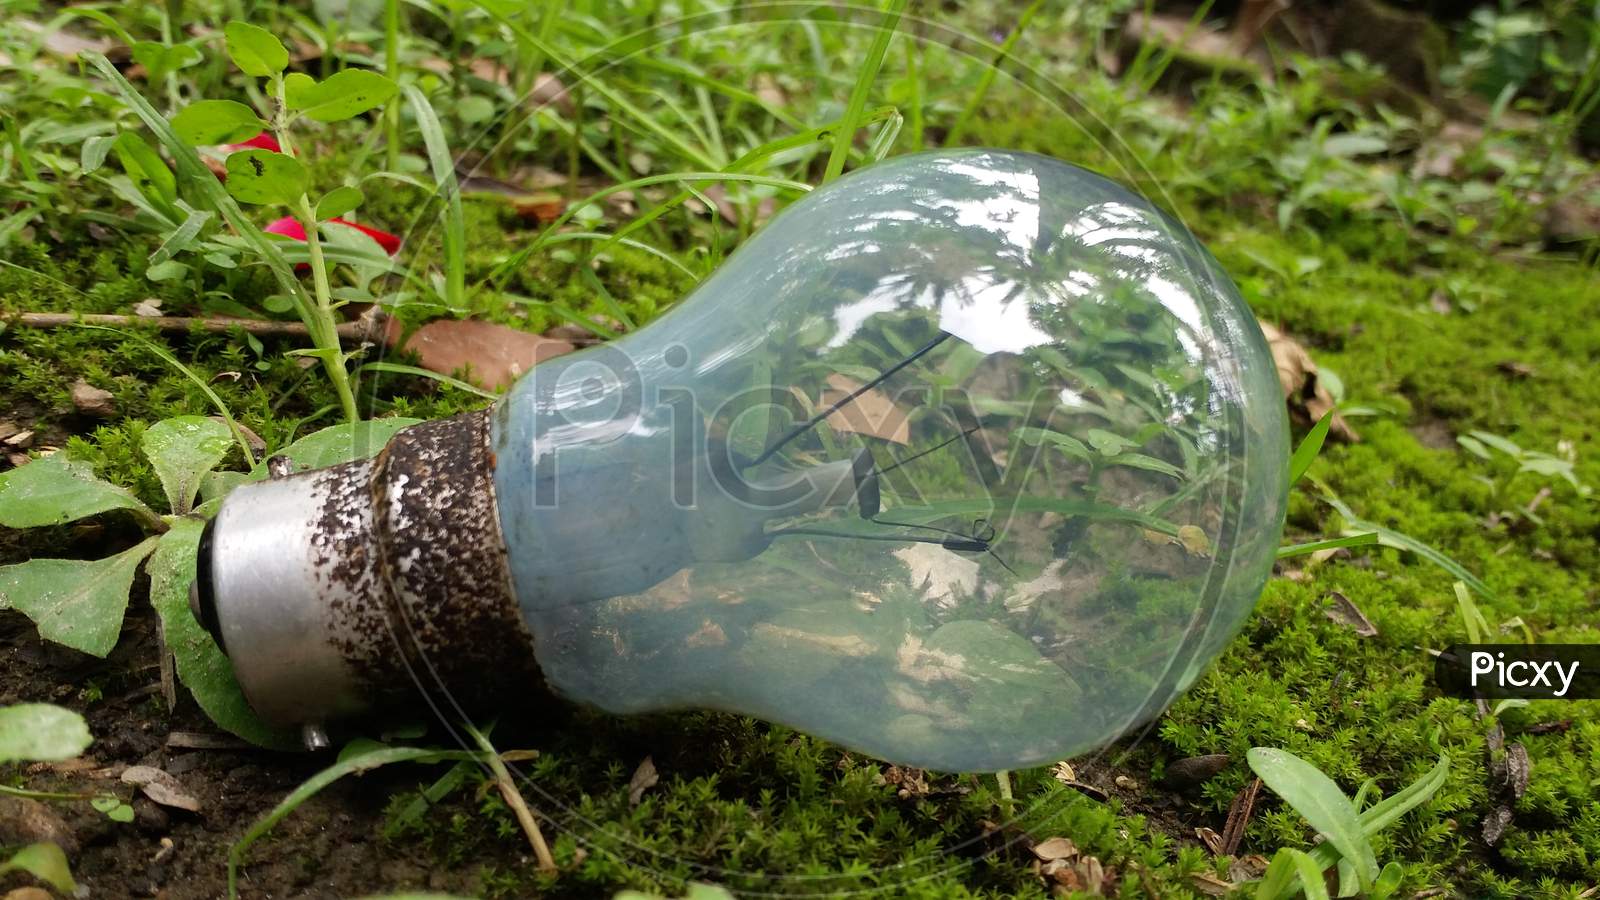 Light bulb in grass